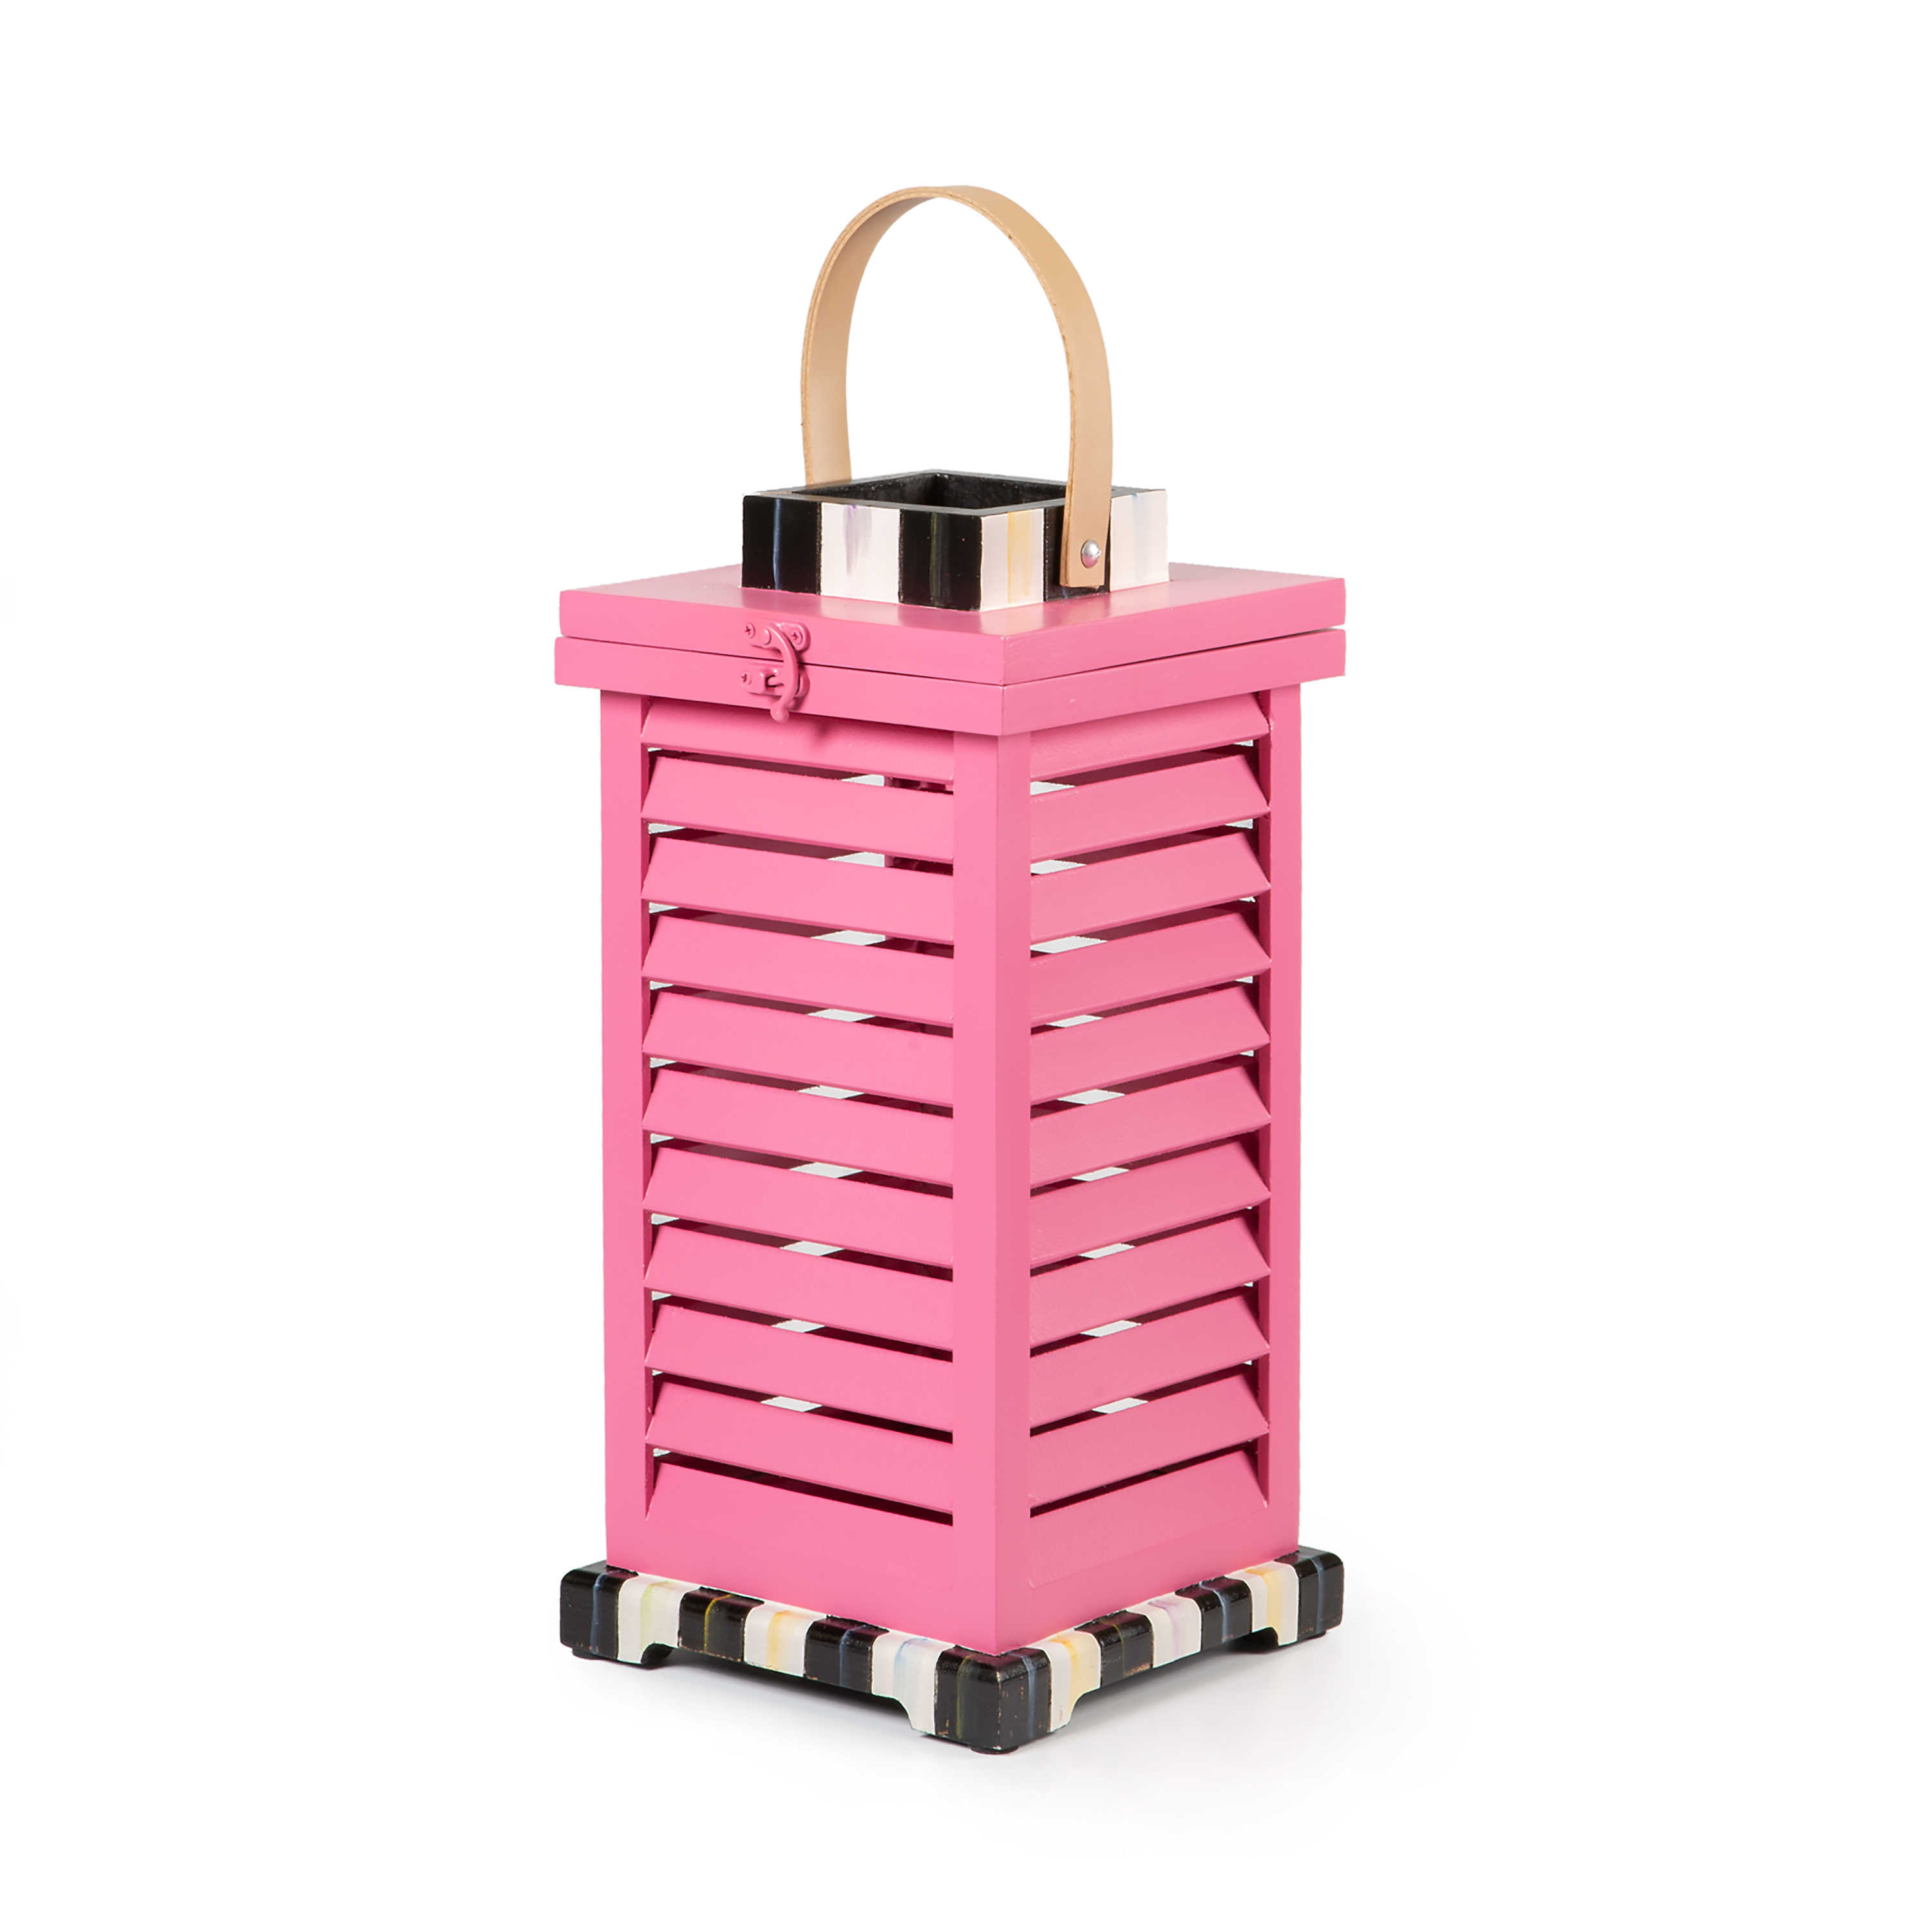 Small Shutter Lantern - Pink mackenzie-childs Panama 0